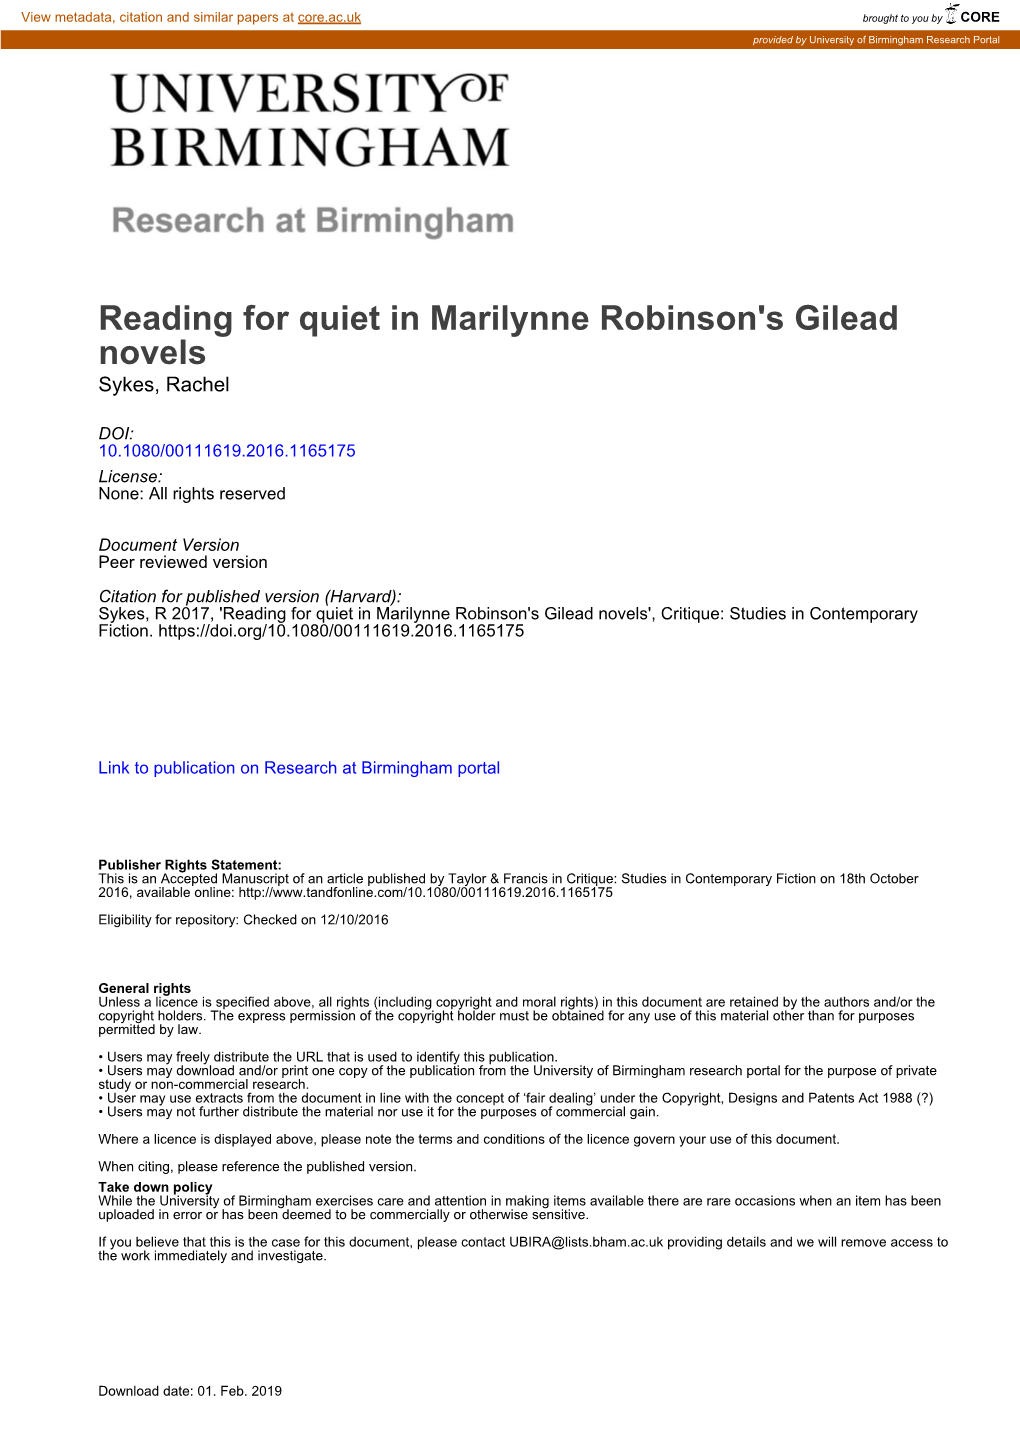 Reading for Quiet in Marilynne Robinson's Gilead Novels Sykes, Rachel